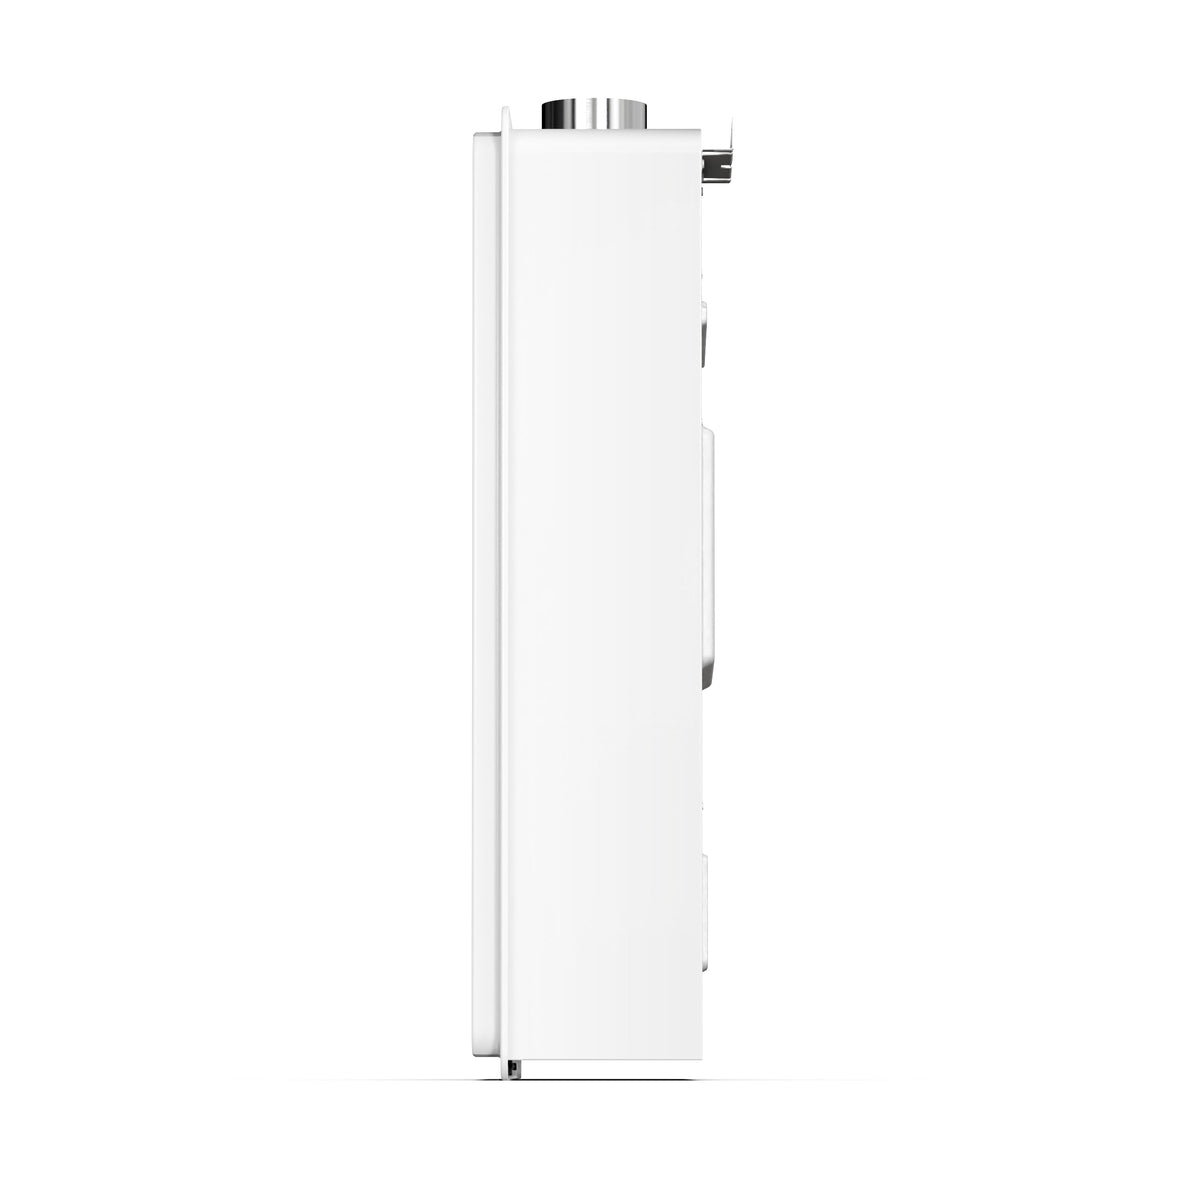 Eccotemp Heaters Eccotemp 6.5 GPM Indoor Liquid Propane Tankless Water Heater